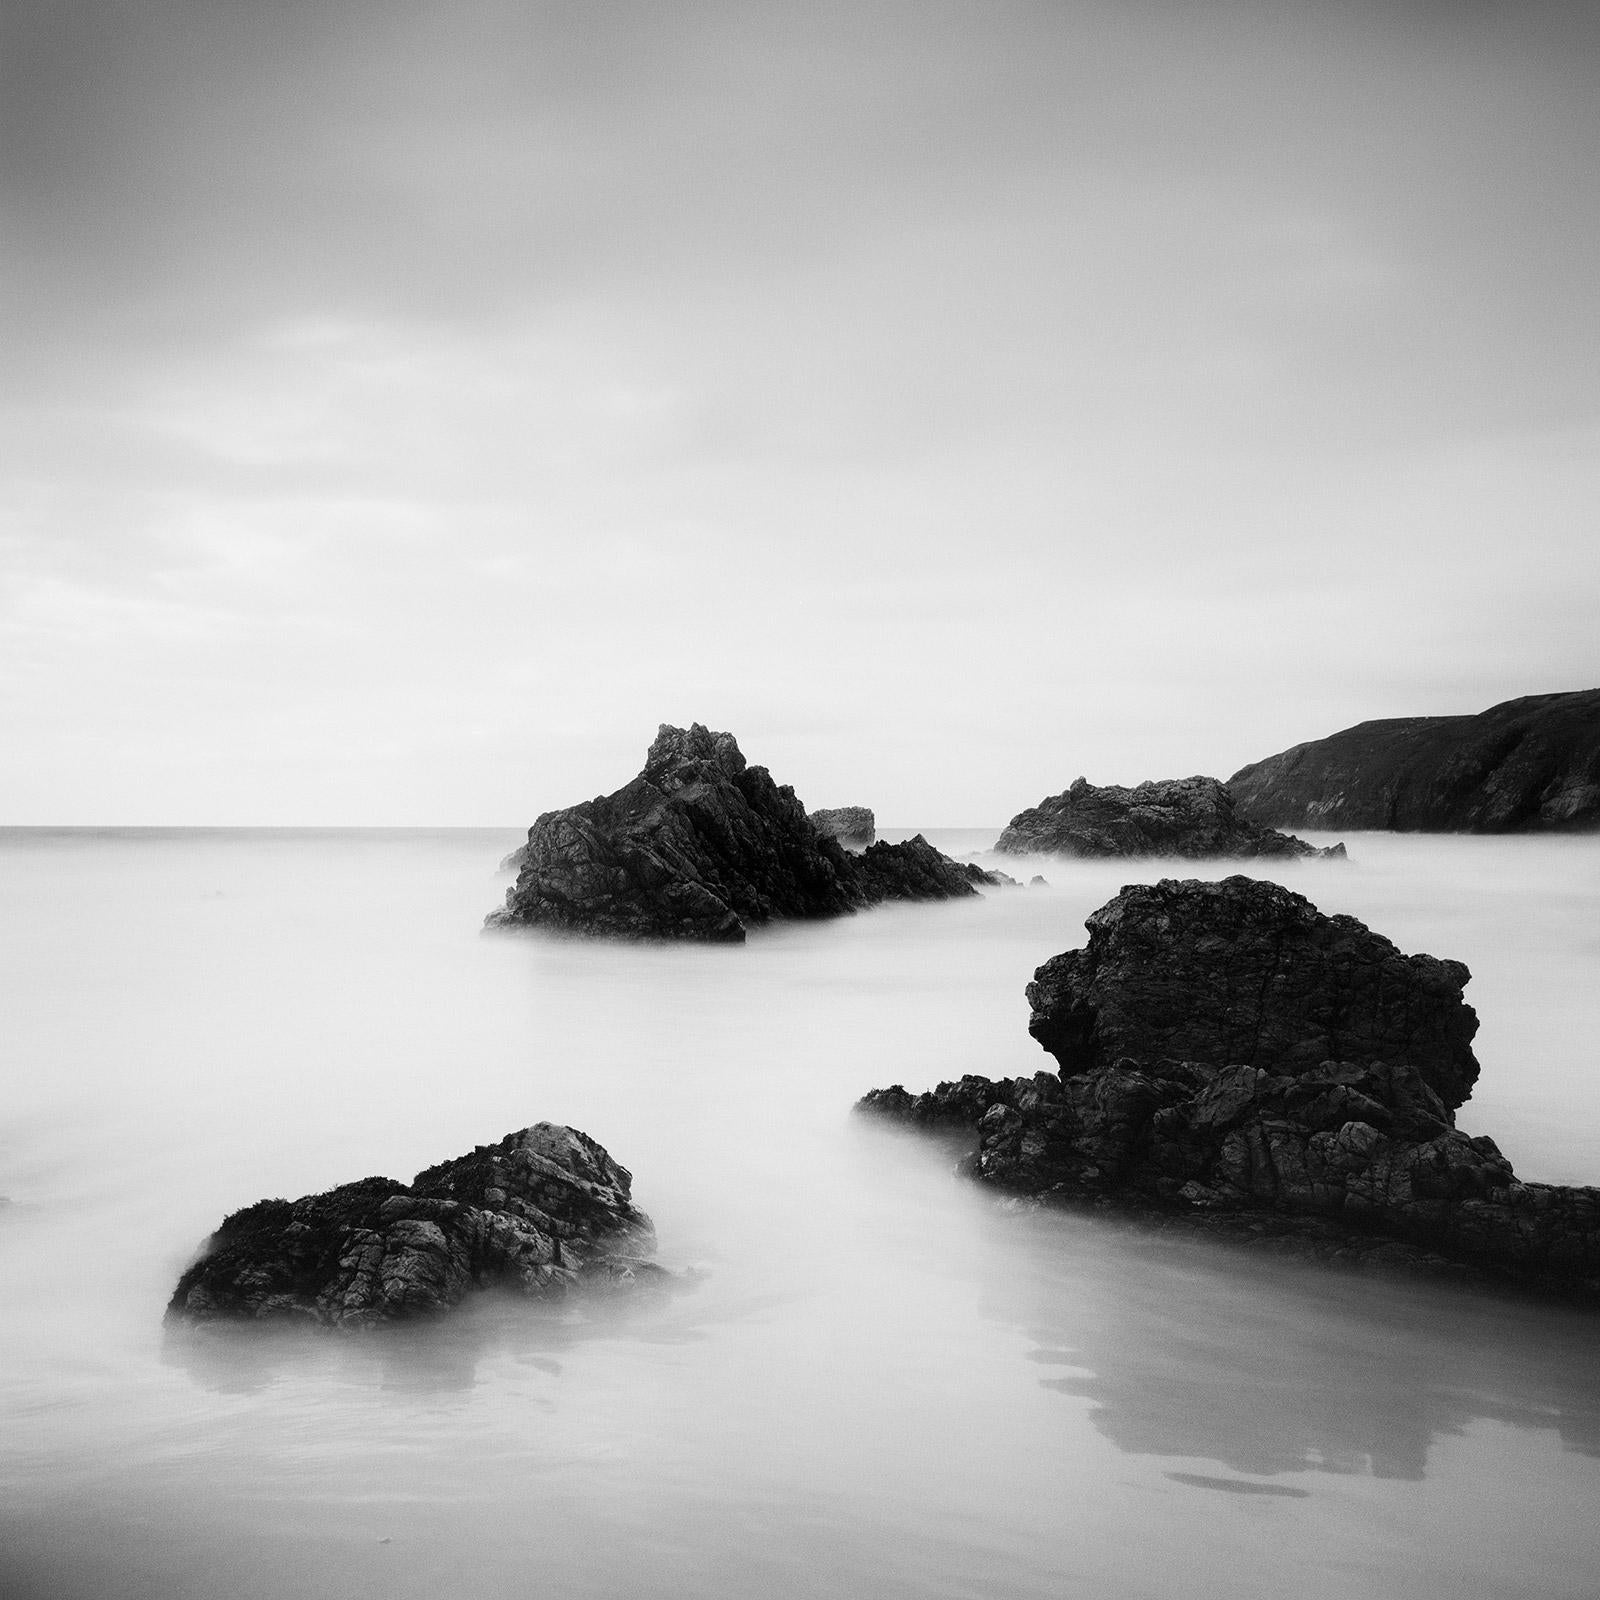 Gerald Berghammer Landscape Photograph - Award Winning Beach, coastline, Scotland, black and white landscape photography